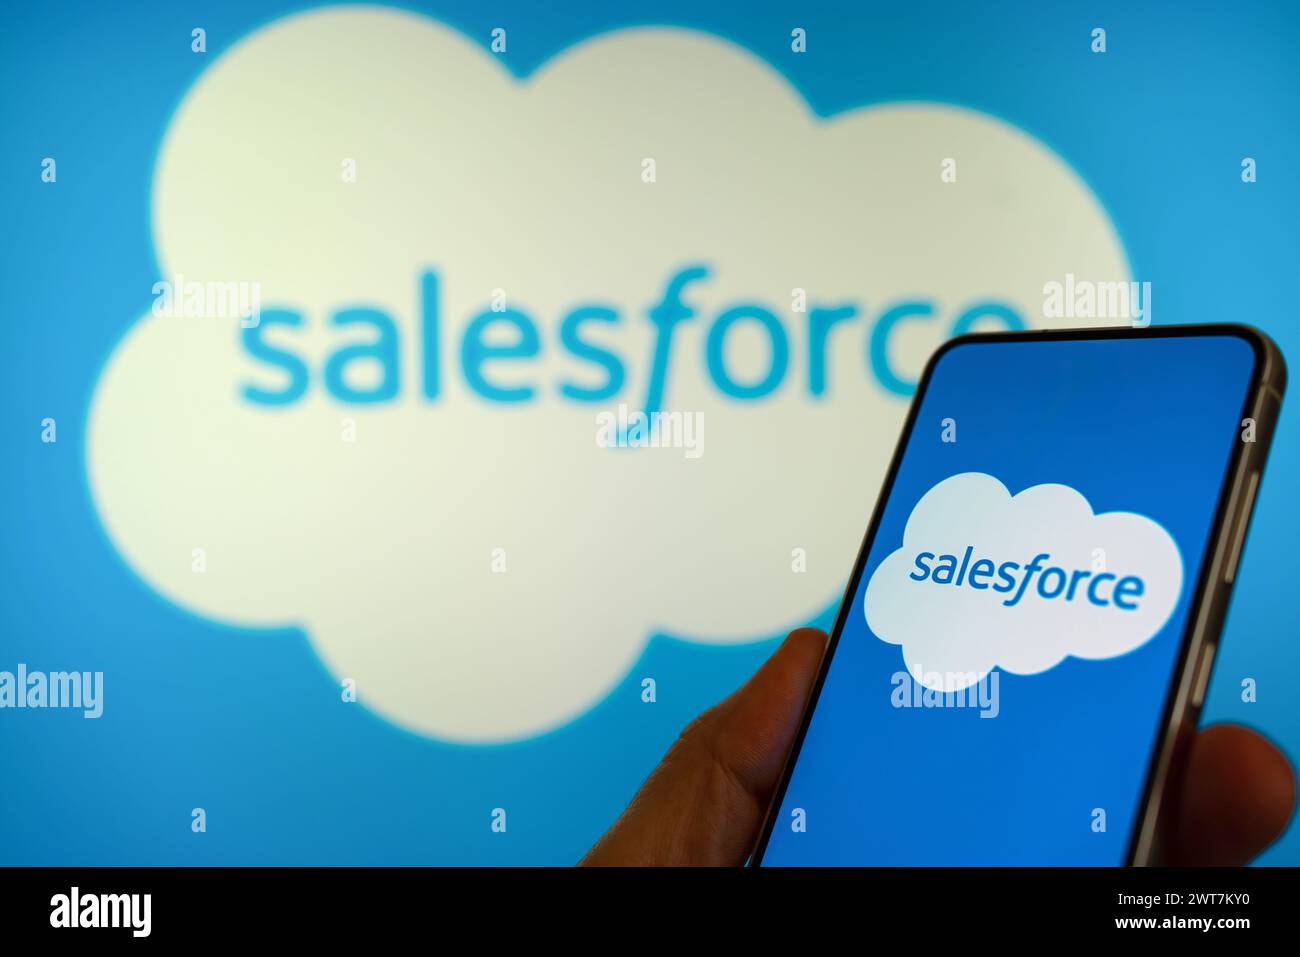 Salesforce company logo Stock Photo